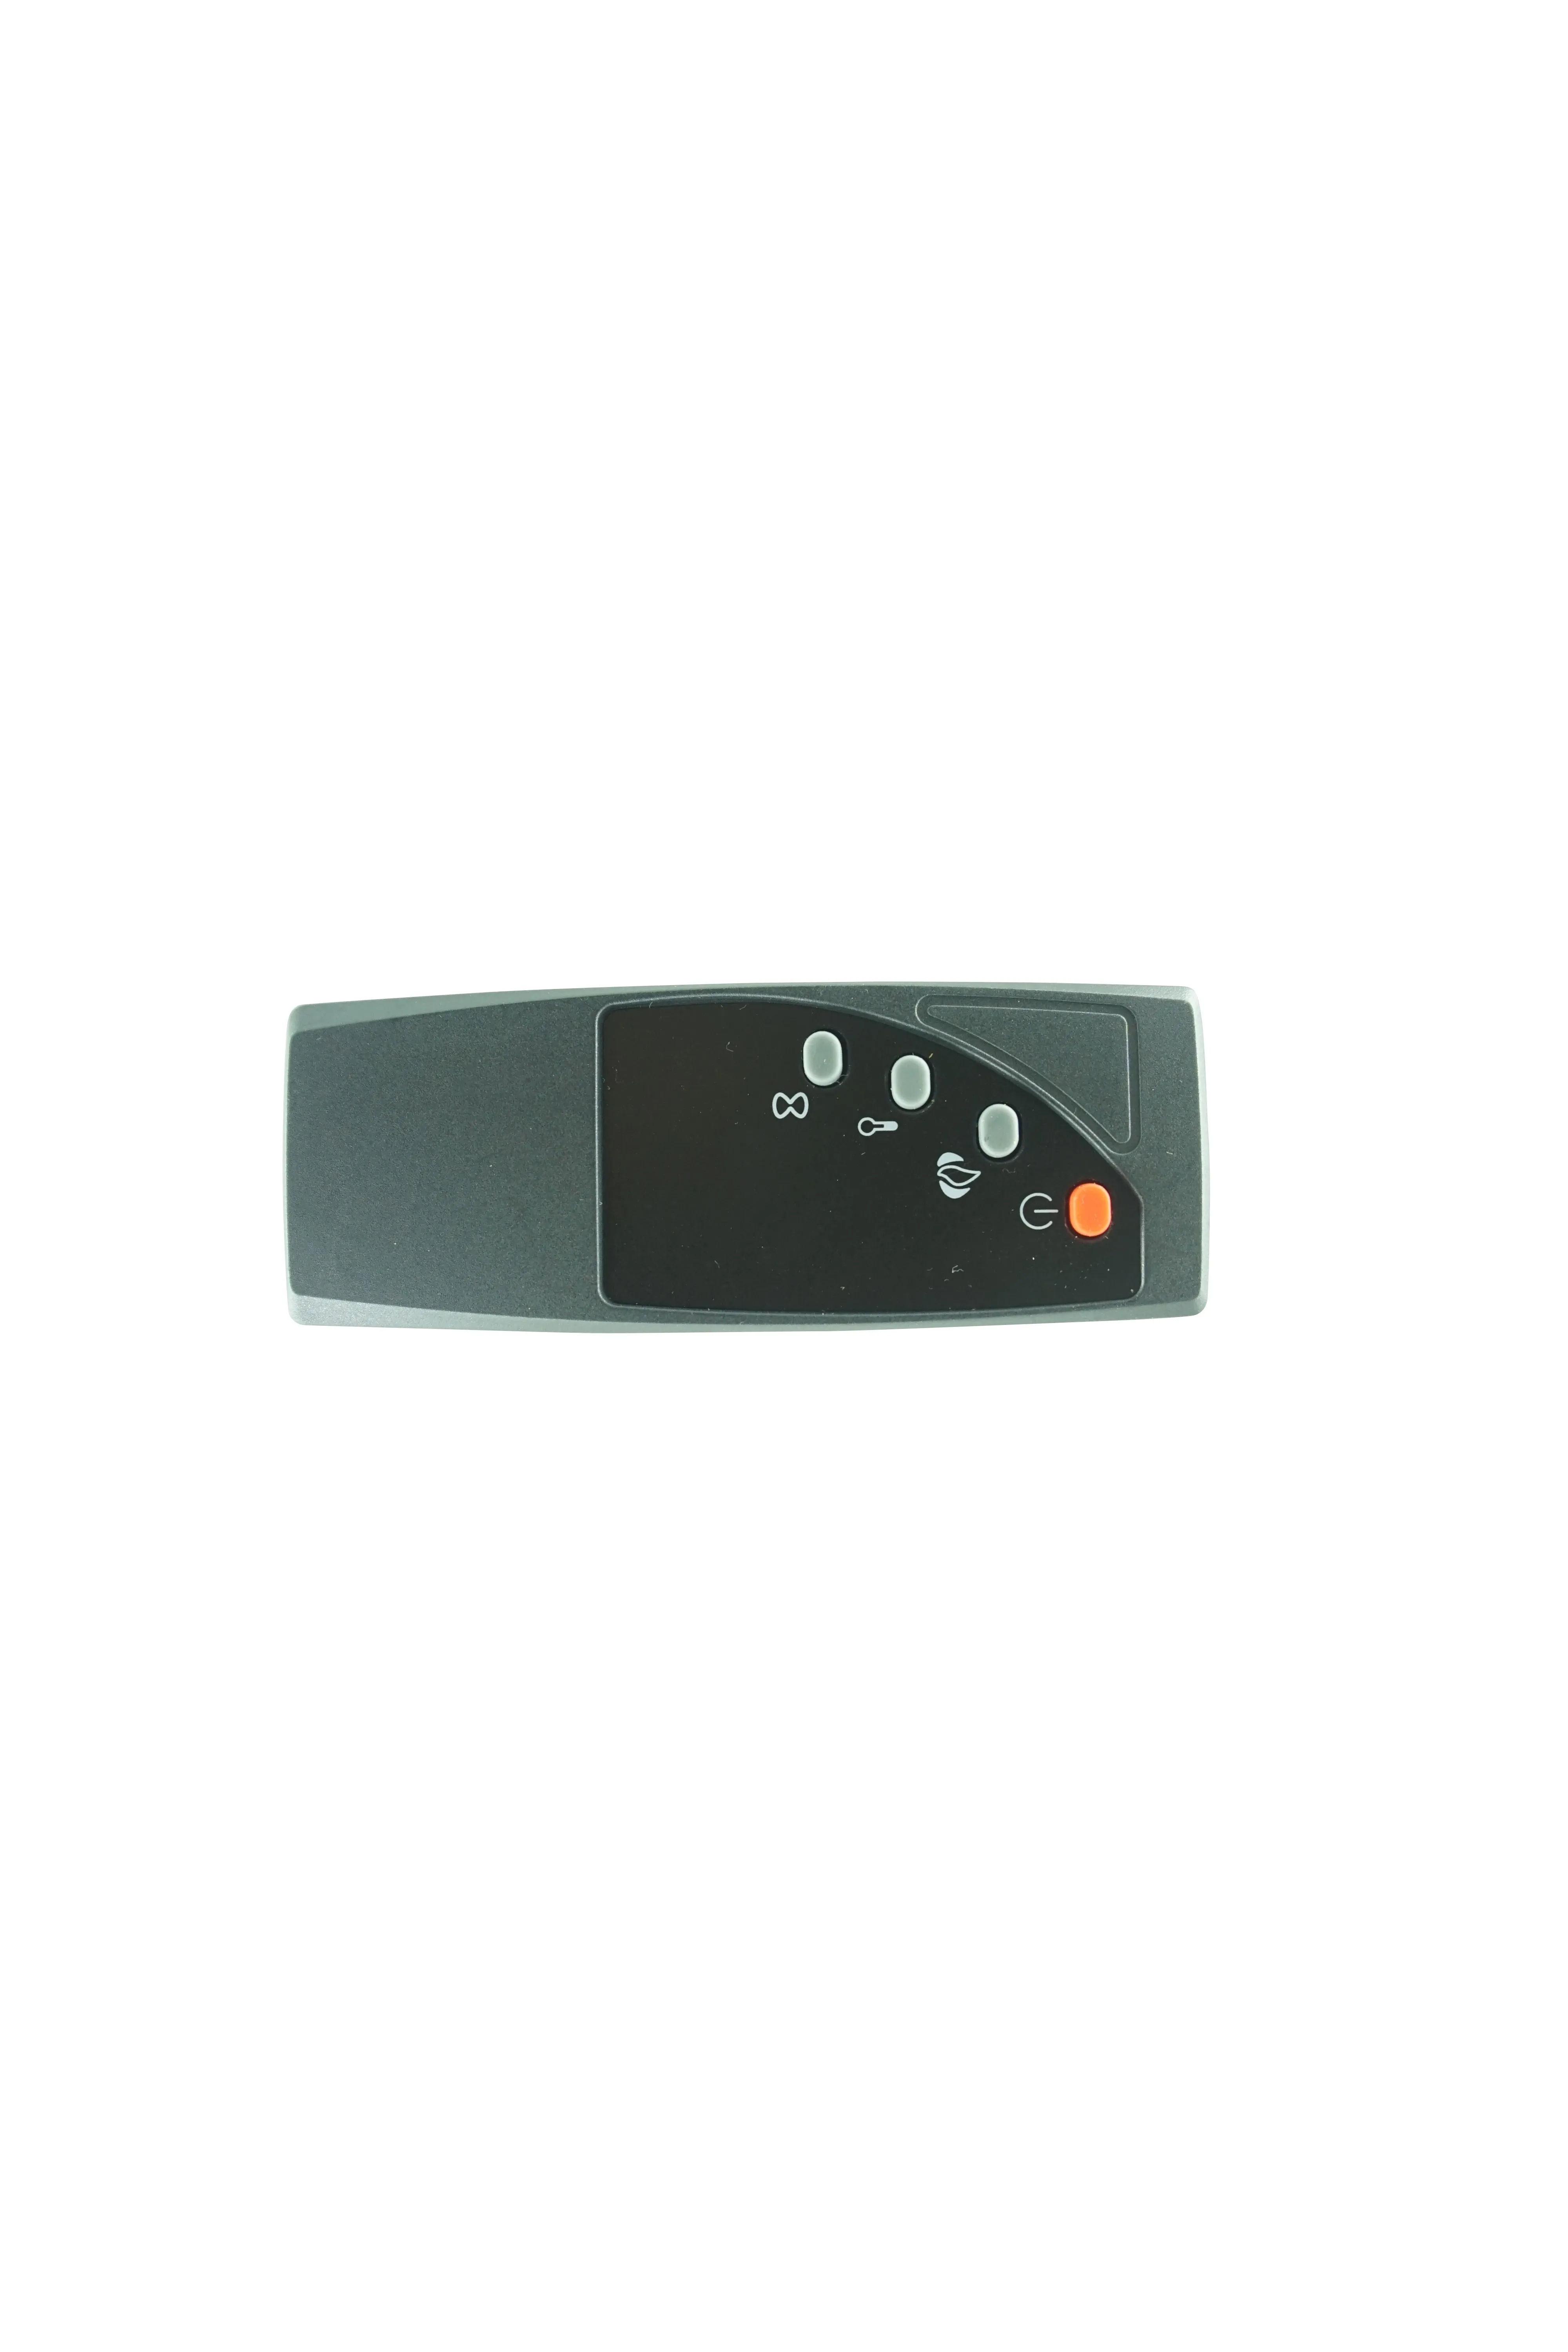 Remote Control For Twin Star Duraflame SL-5010-BLK SL-5010-BRZ SL-5010-CIN SL-5010-CRM SL-5010-GRY SL-5010-PIS DFI-5010-01 DFI-5010-02 3D Electric Fireplace Heater